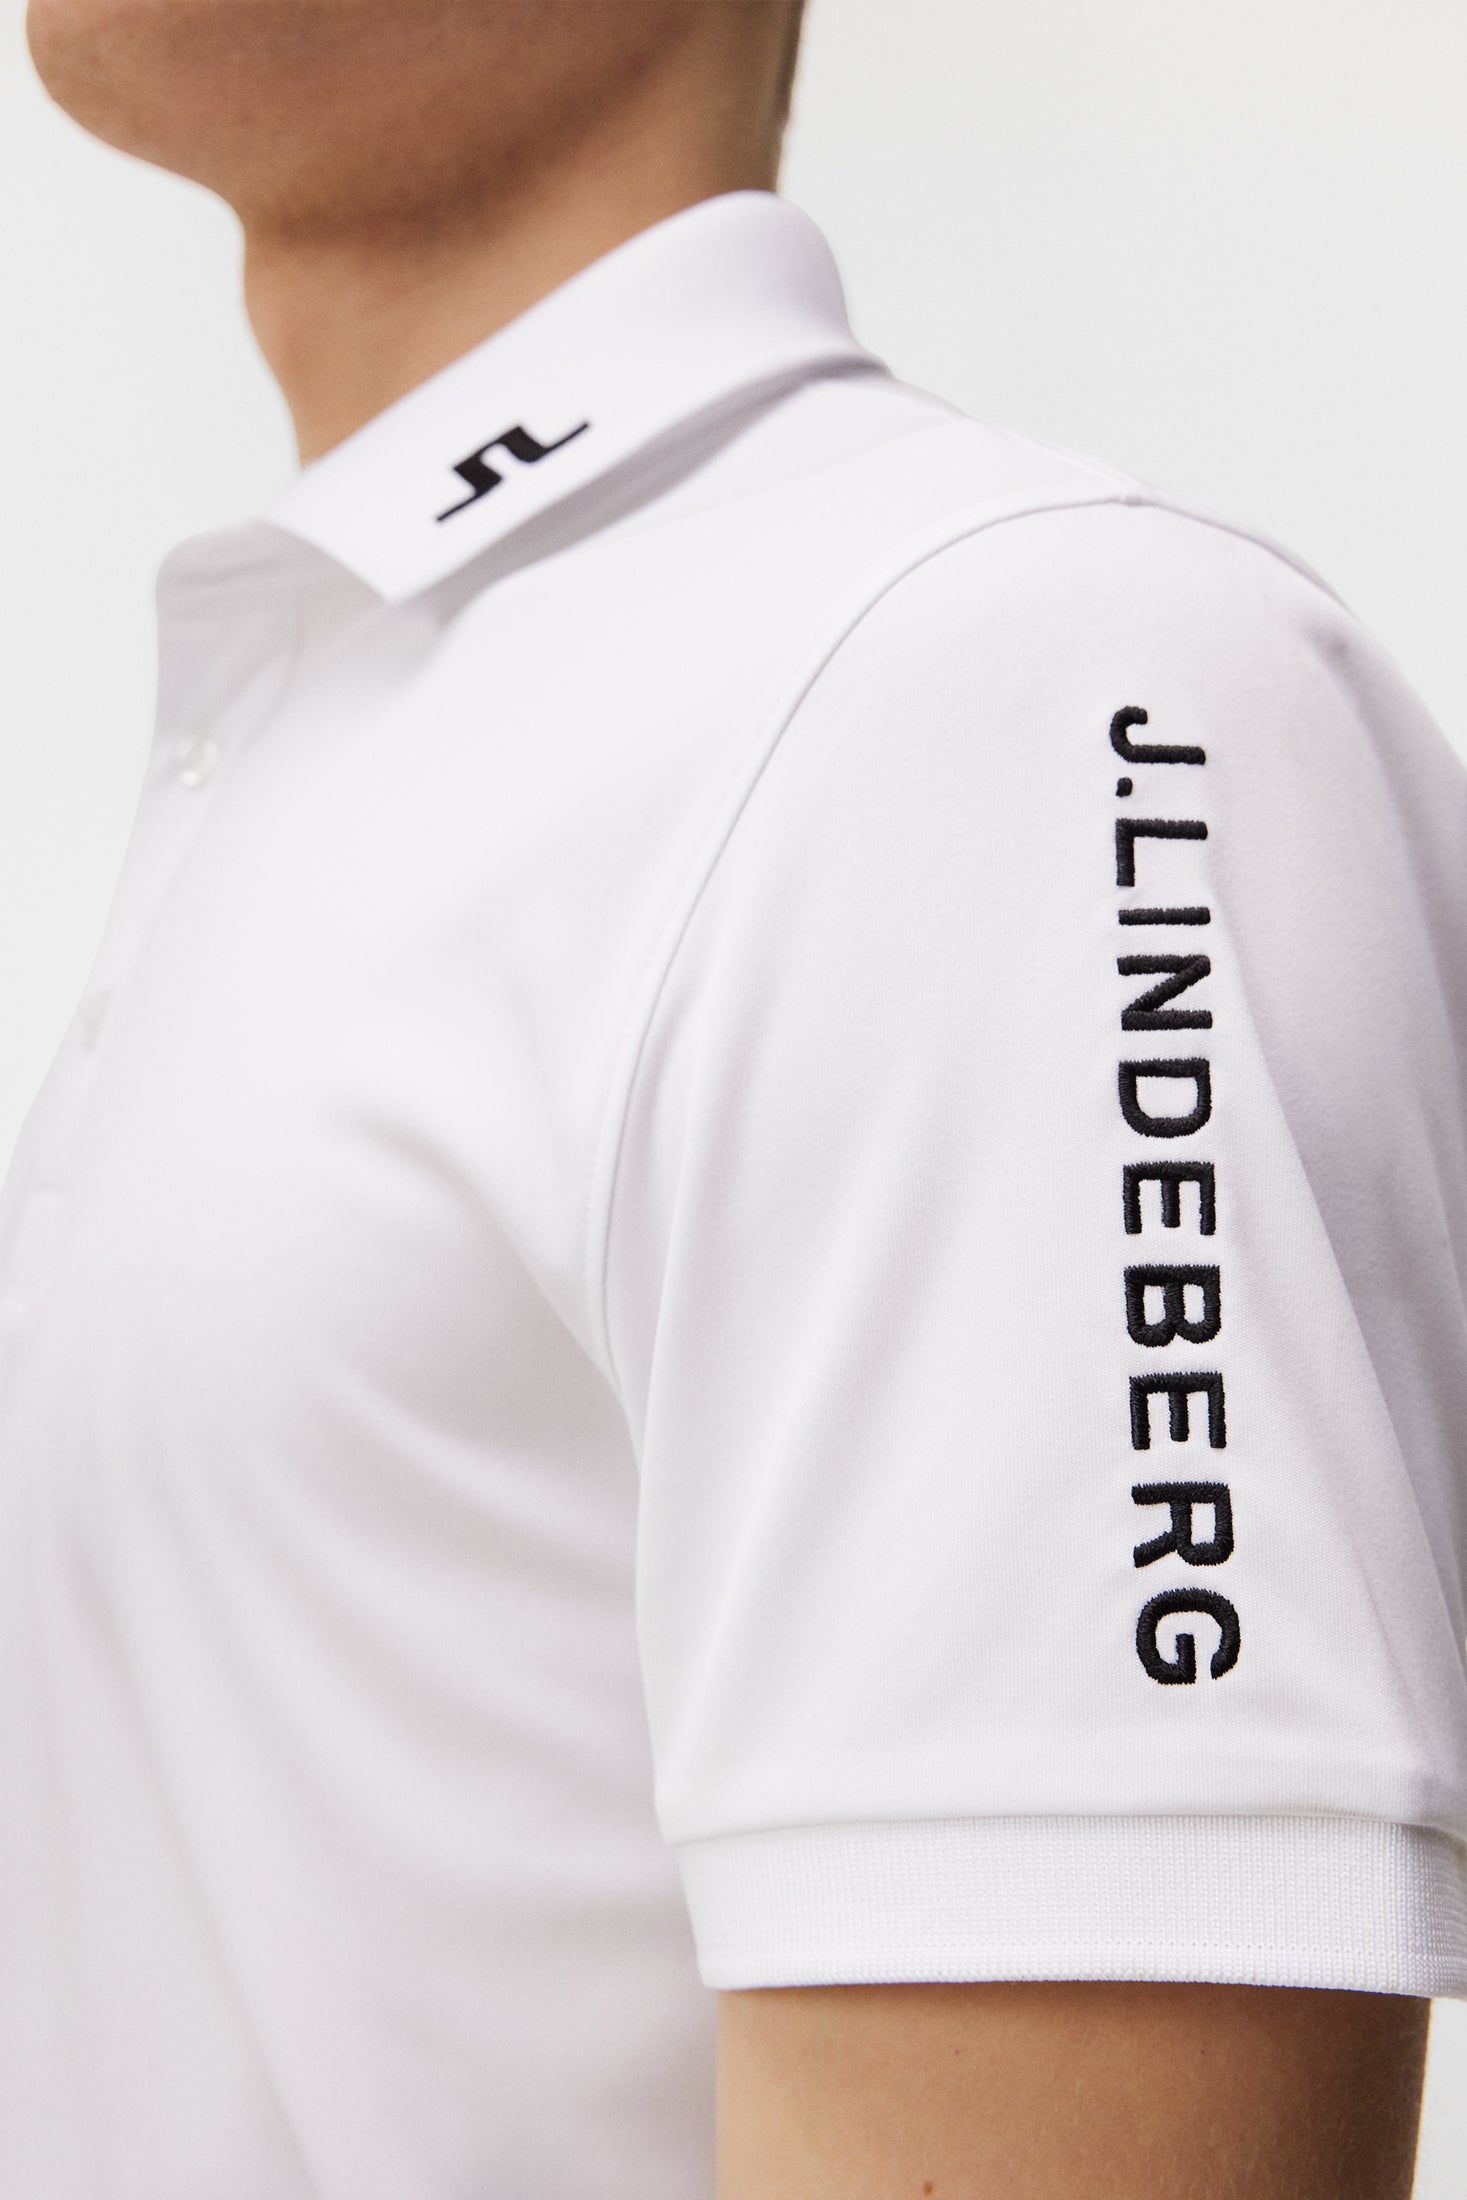 J Lindeberg Tour Tech Slim Fit Polo Shirt review